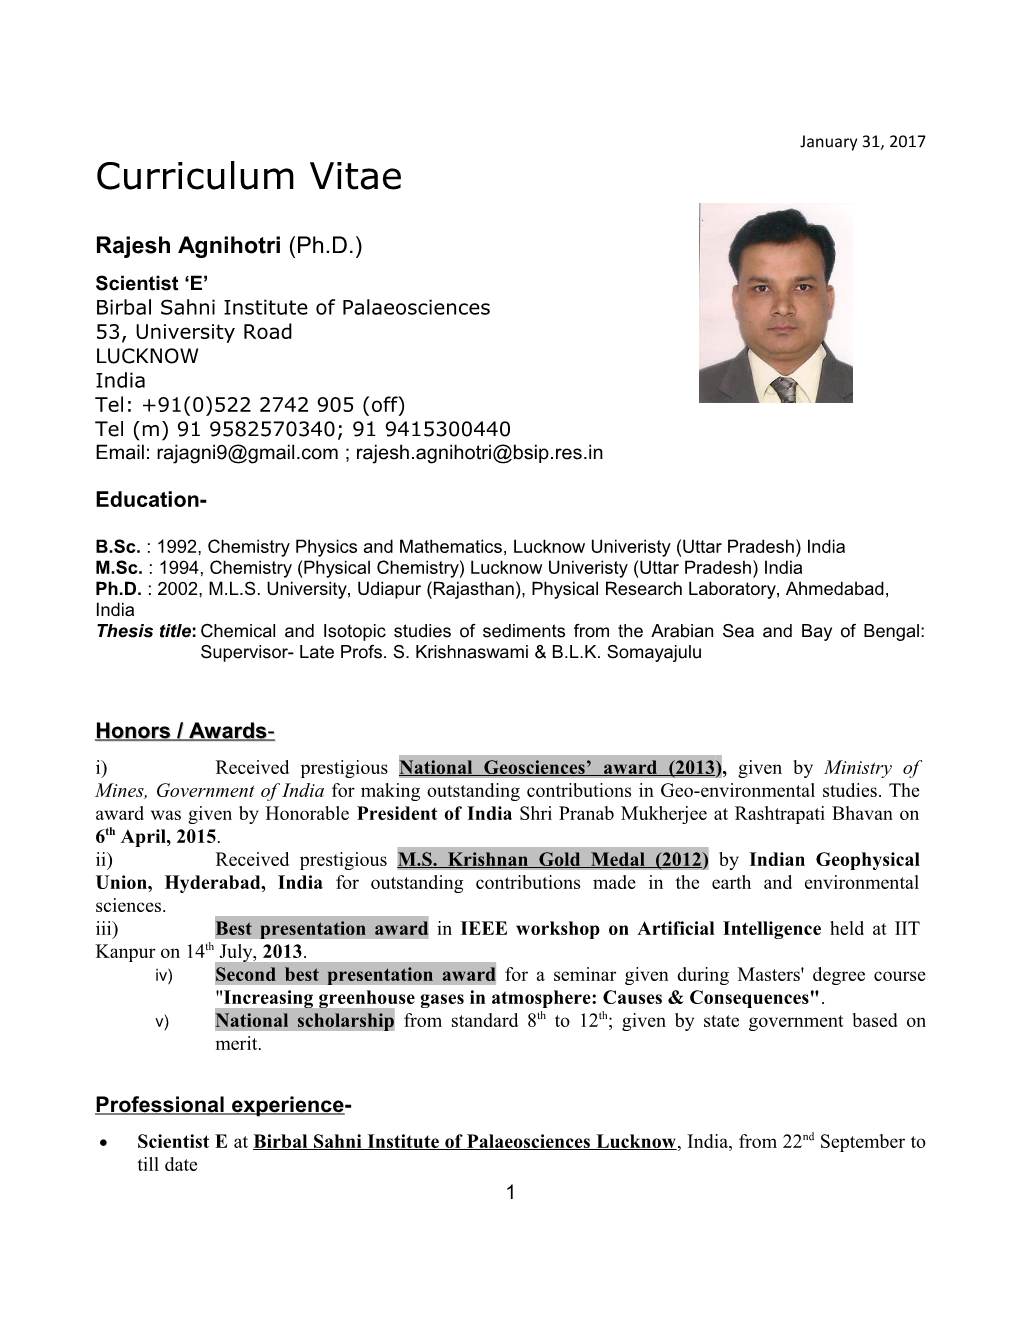 B.Sc. : 1992, Chemistry Physics and Mathematics, Lucknow Univeristy (Uttar Pradesh) India